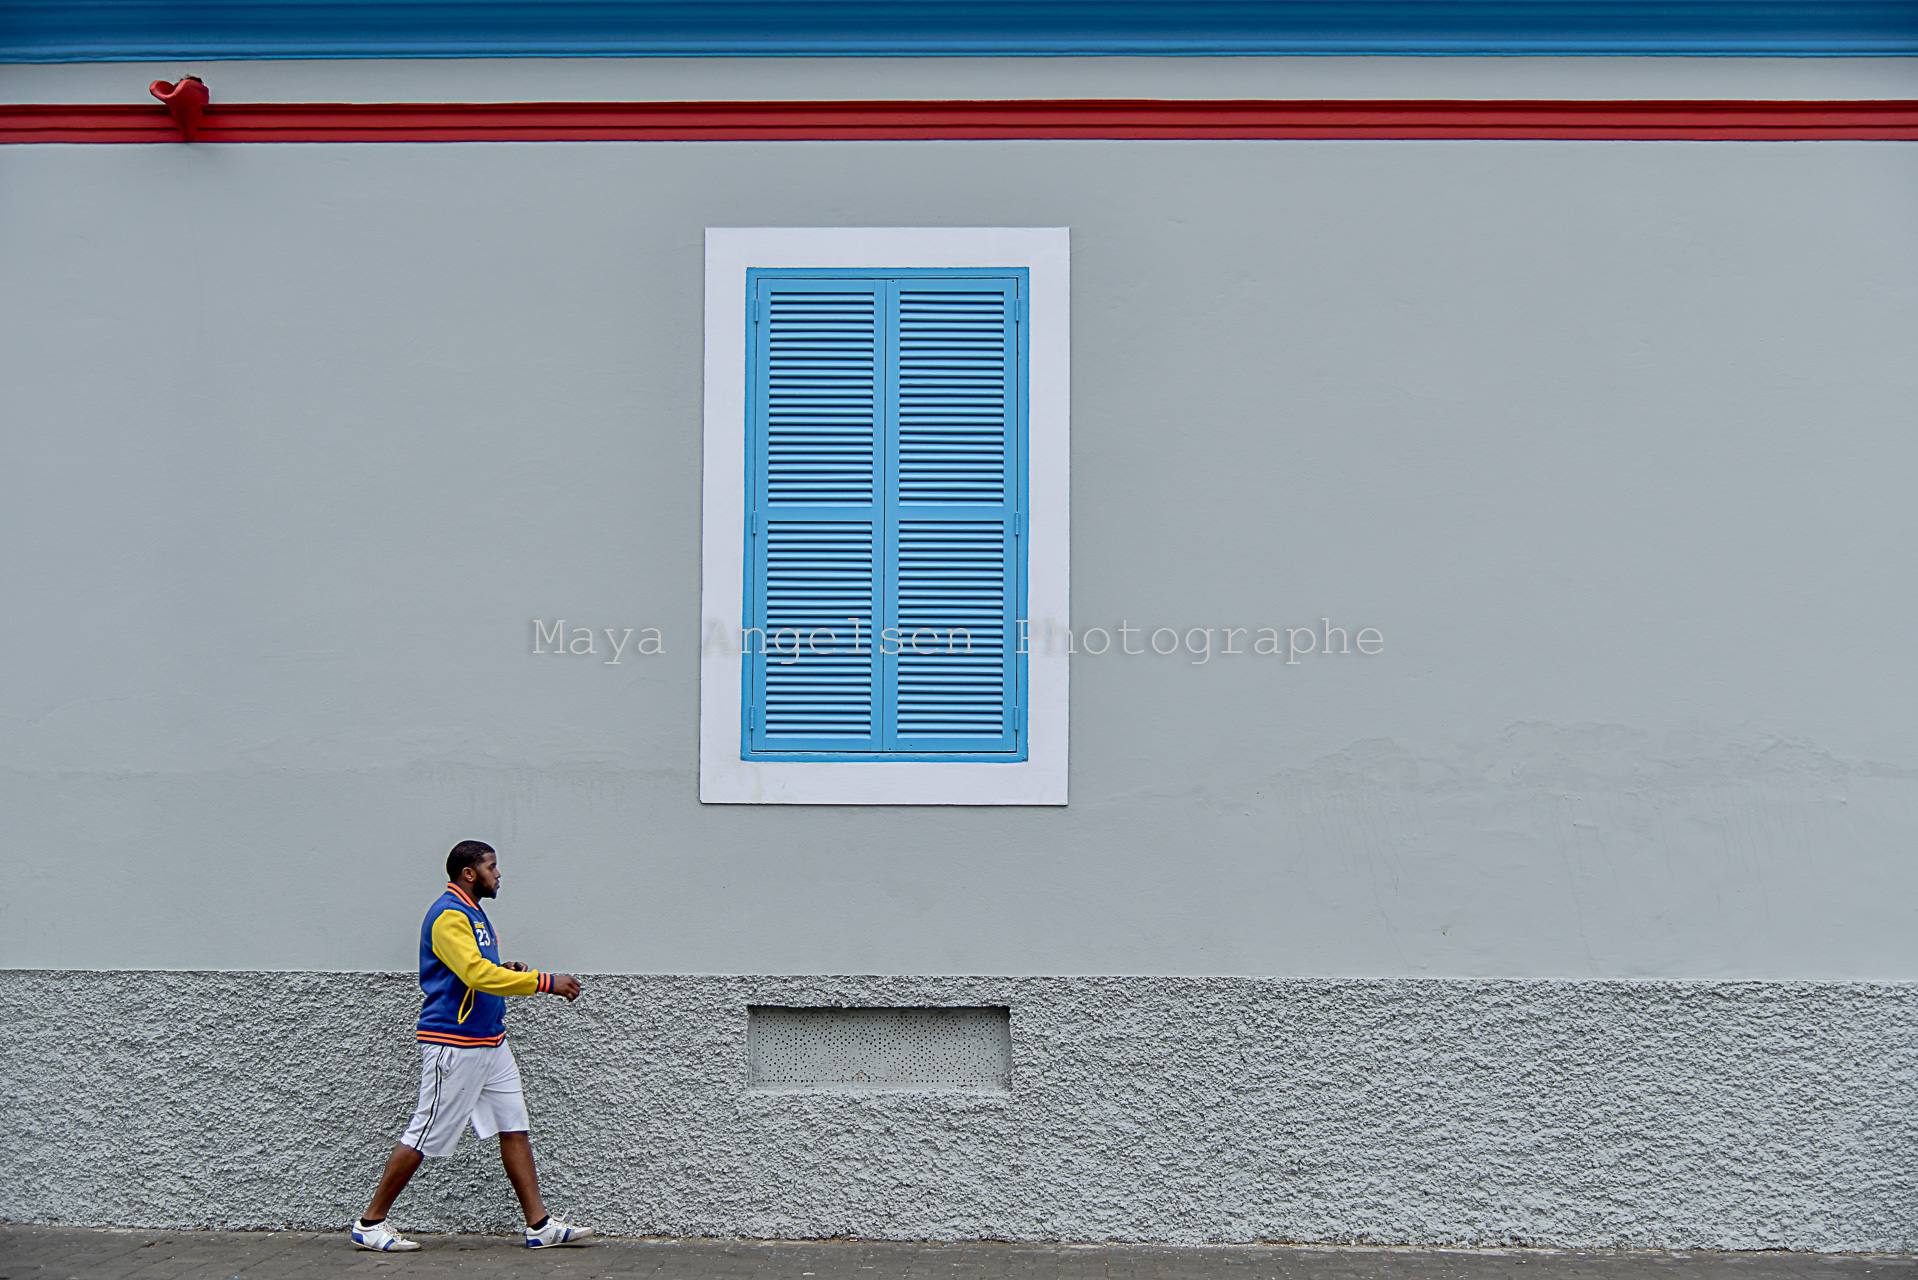 Photographe-Streeart-photo-rue-maya-angelsen-bleu-blanc-rouge